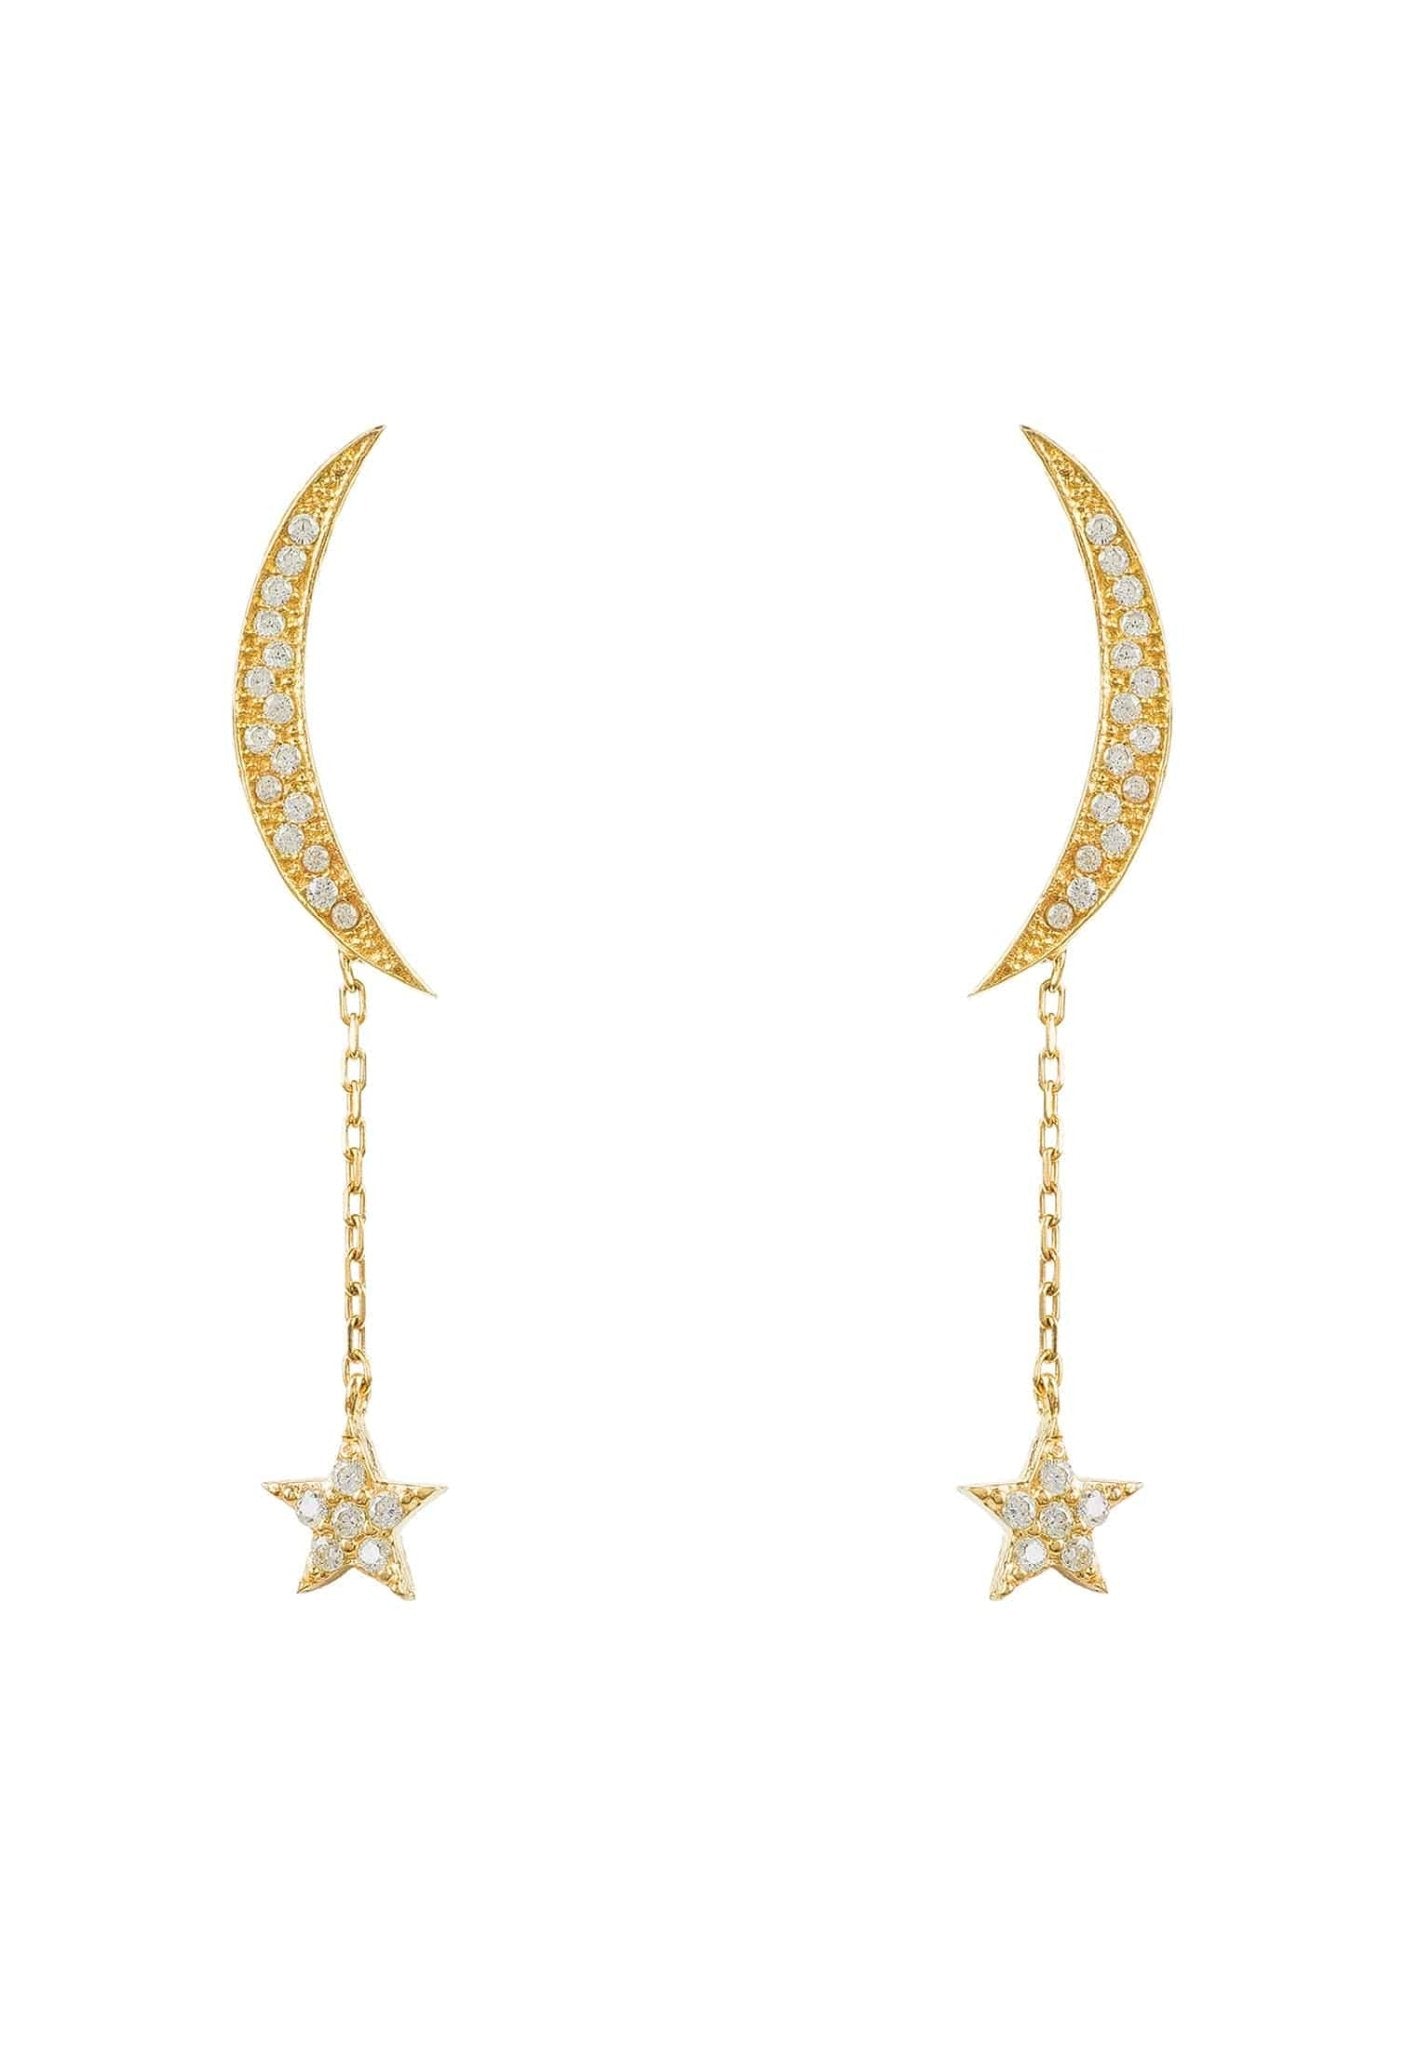 Moon And Star Earrings Gold White Cz - LATELITA Earrings